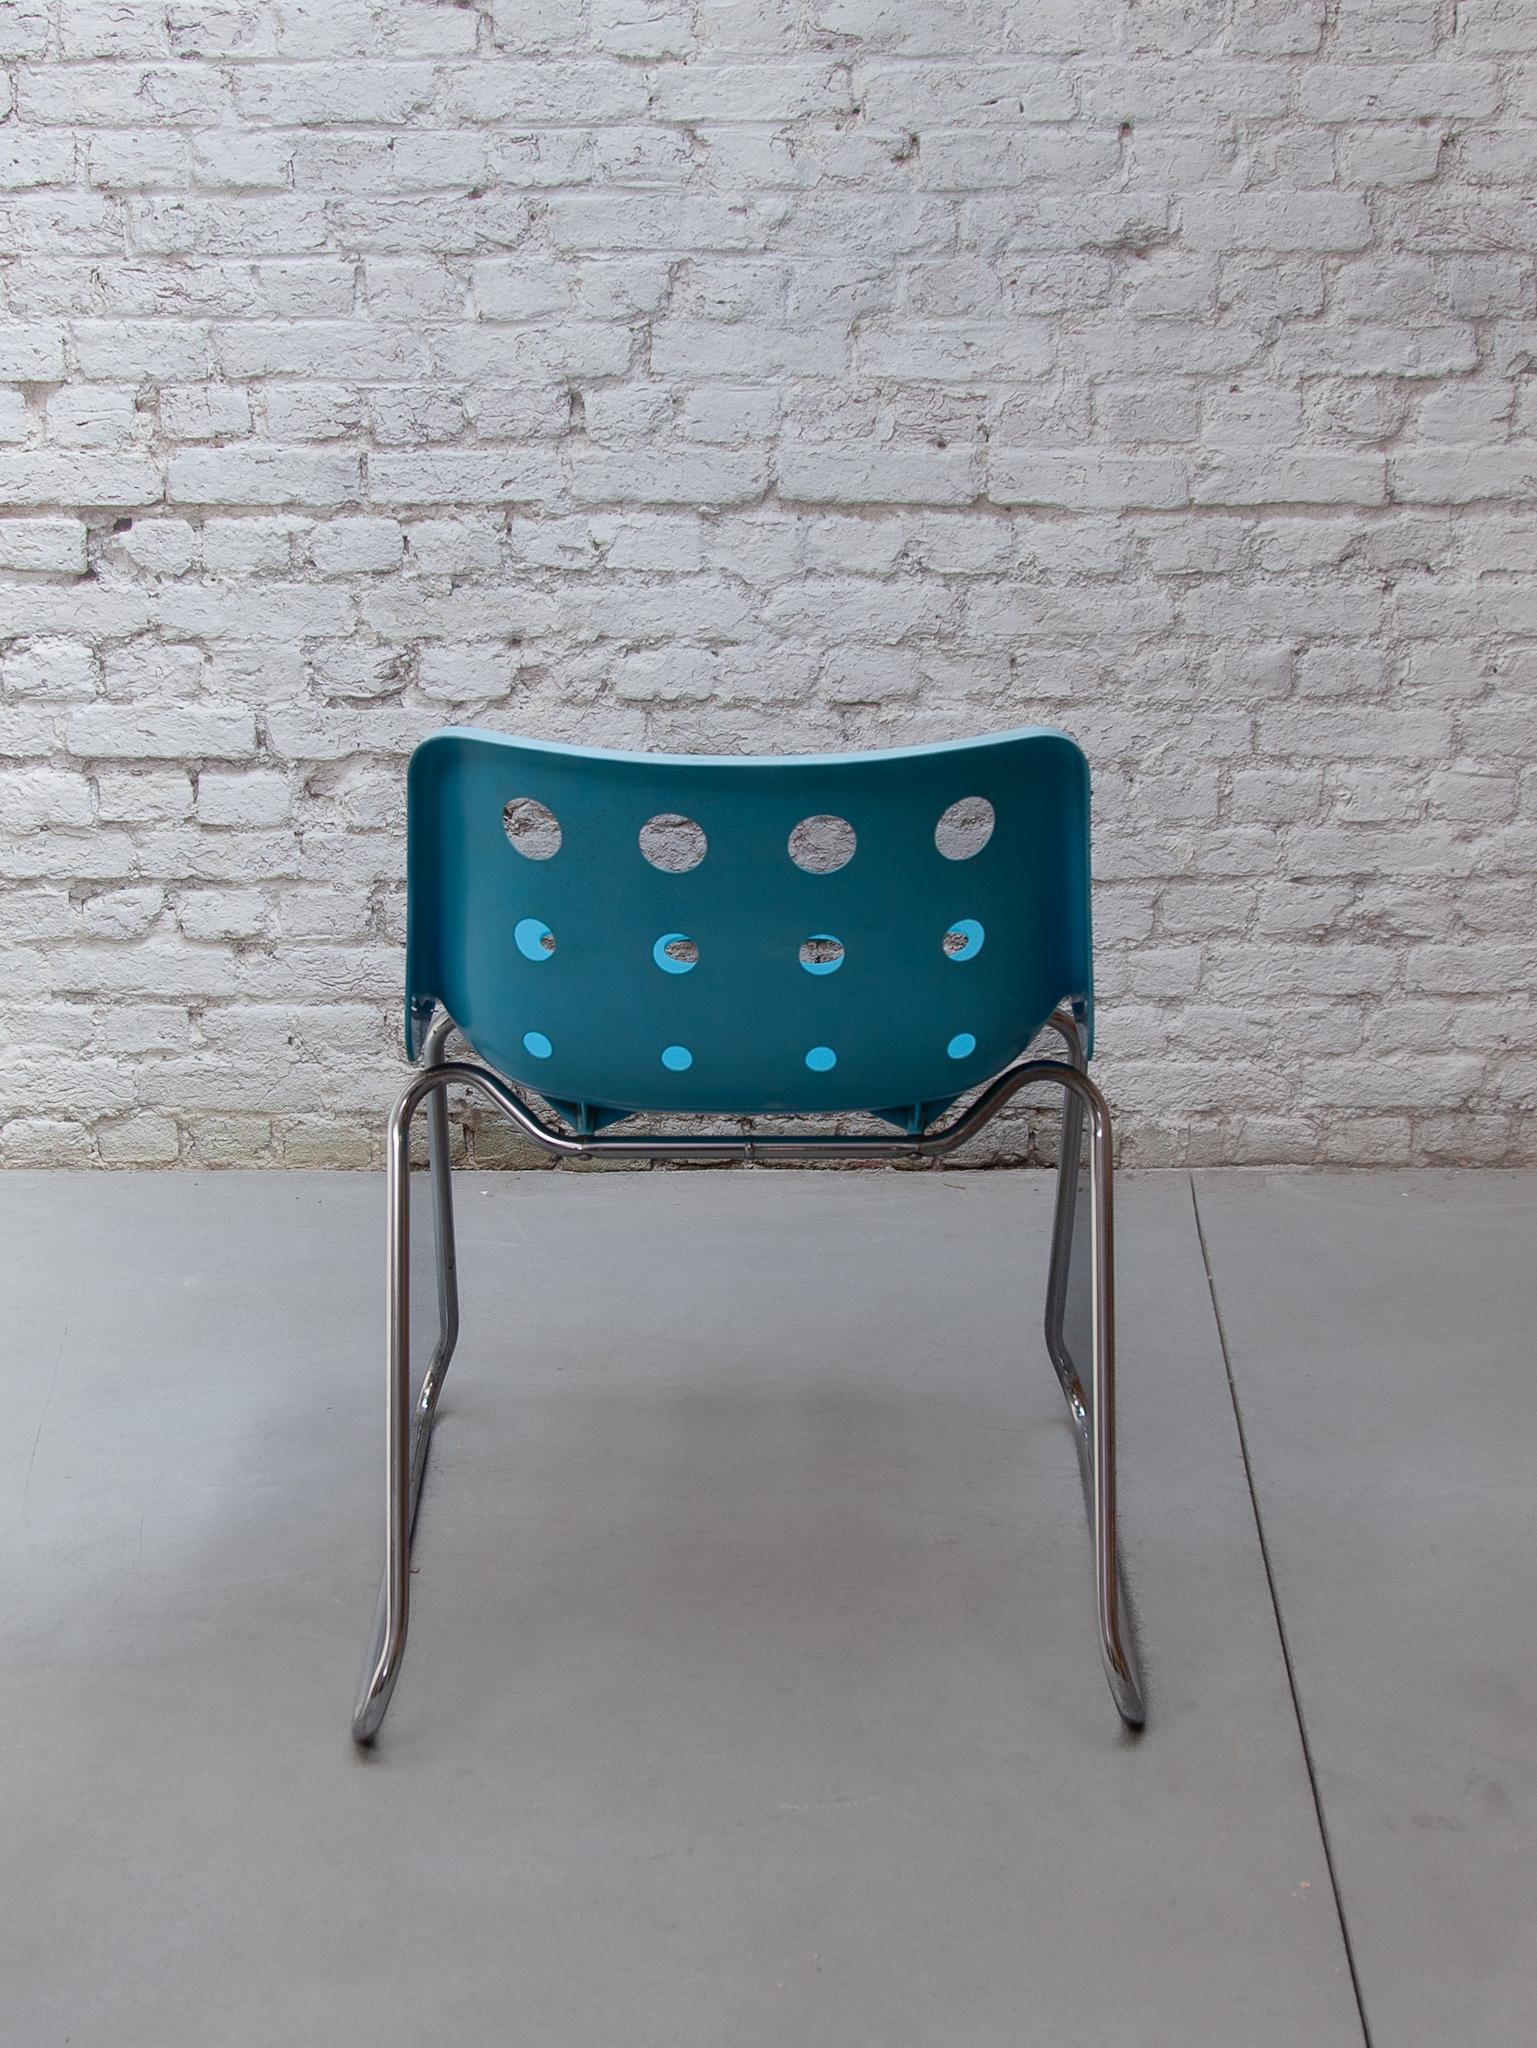 Fin du 20e siècle Ensemble de quatre chaises empilables en traîneau 'Polo' de Robin Day, 1960s Indoor et Outdoor en vente